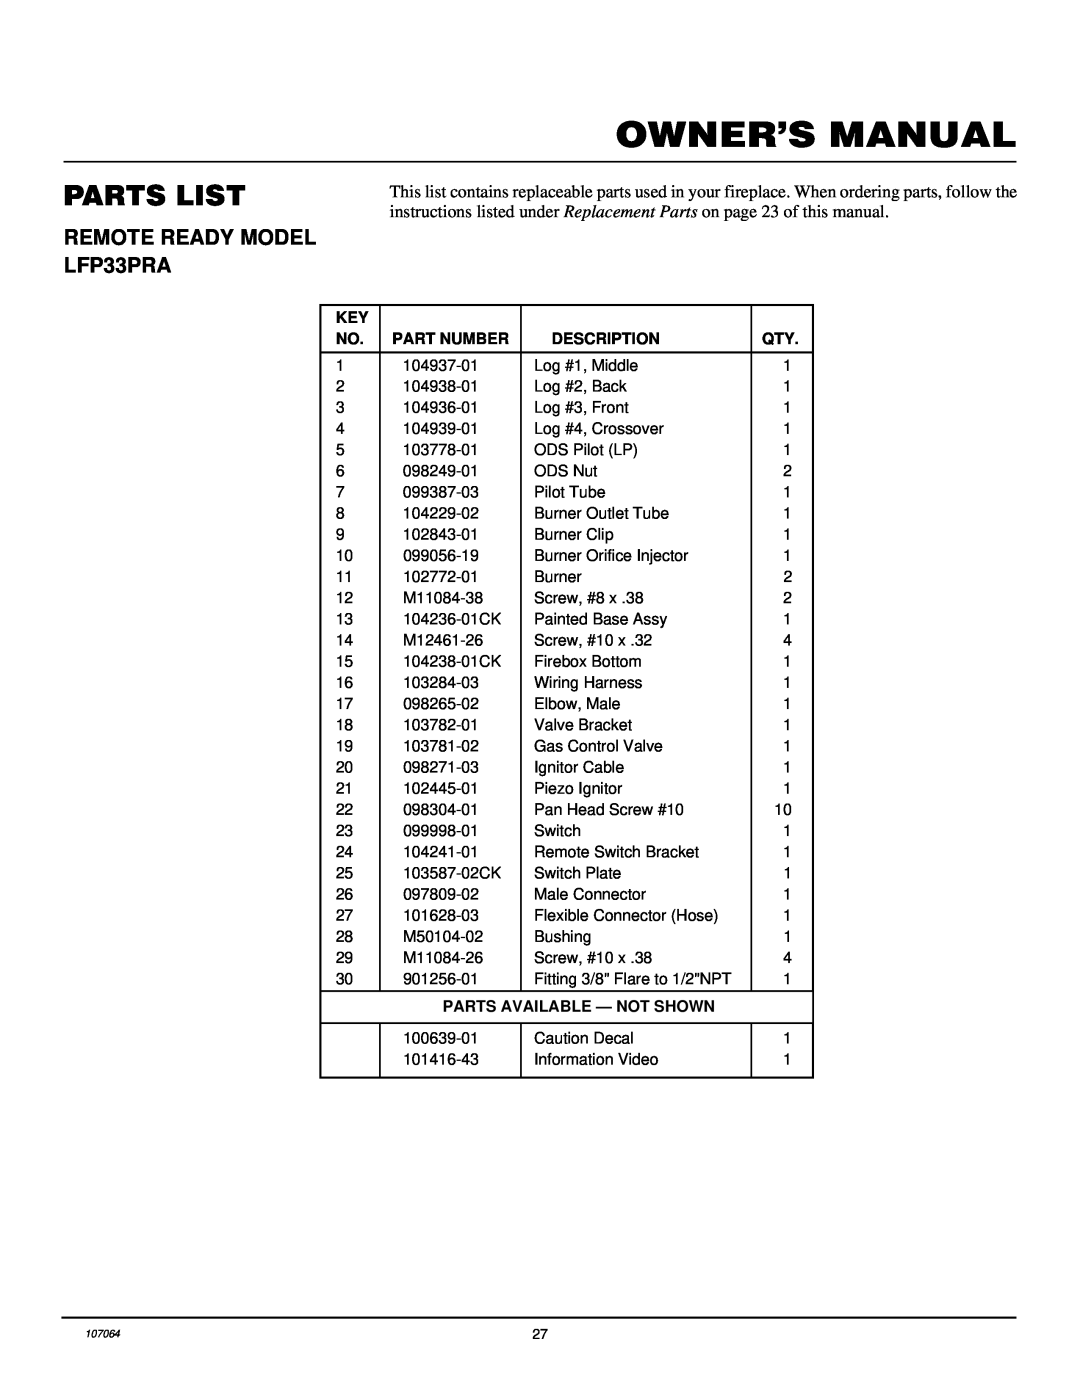 Desa installation manual Parts List, REMOTE READY MODEL LFP33PRA, Part Number, Description, Parts Available - Not Shown 